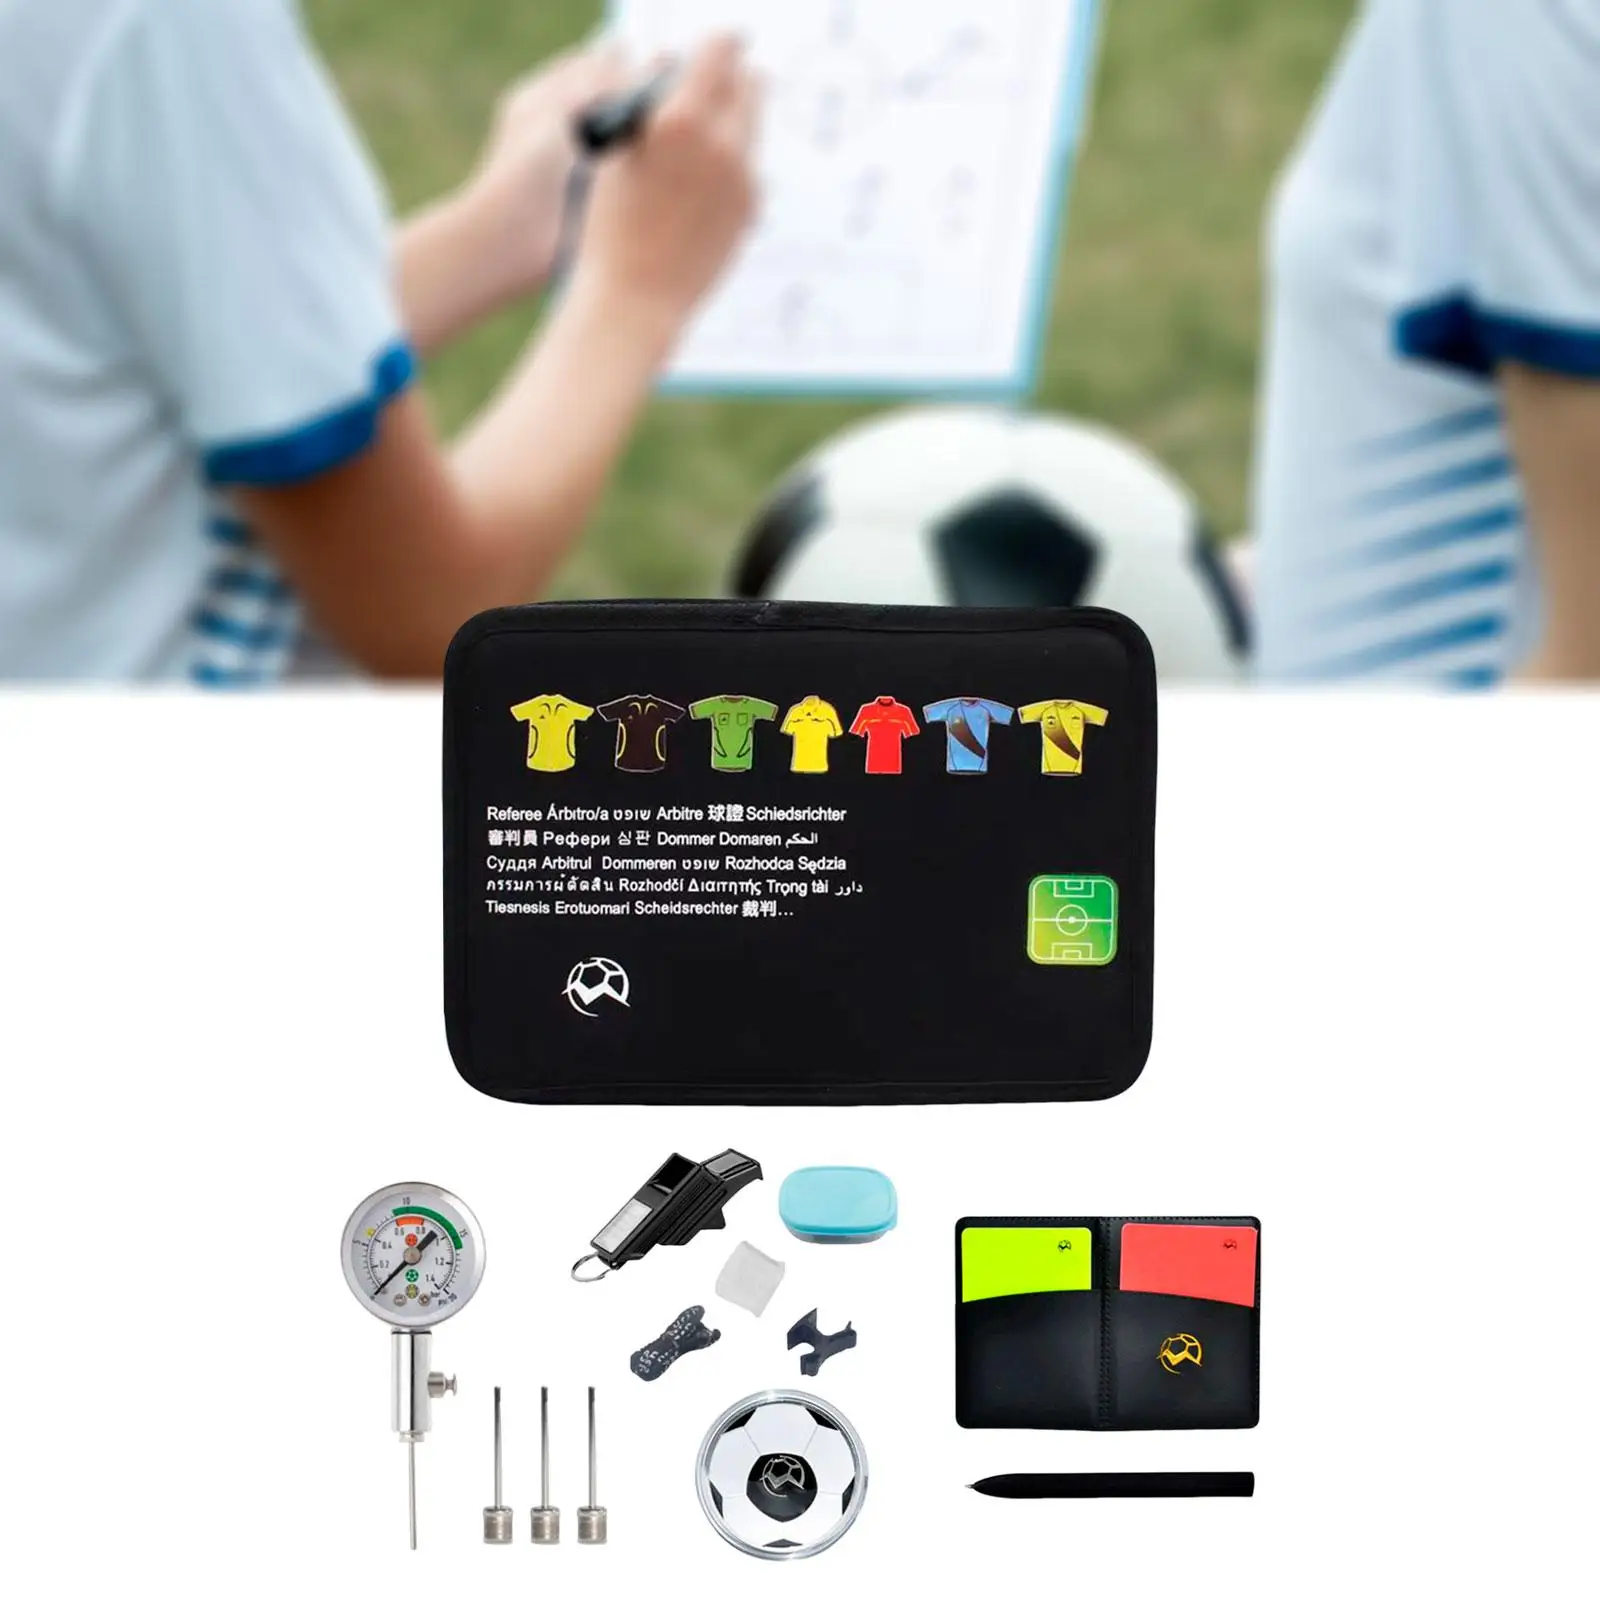 Soccer Referee Accessories Bag Whistle Pressure Gauge Pen Card Set Sheets for